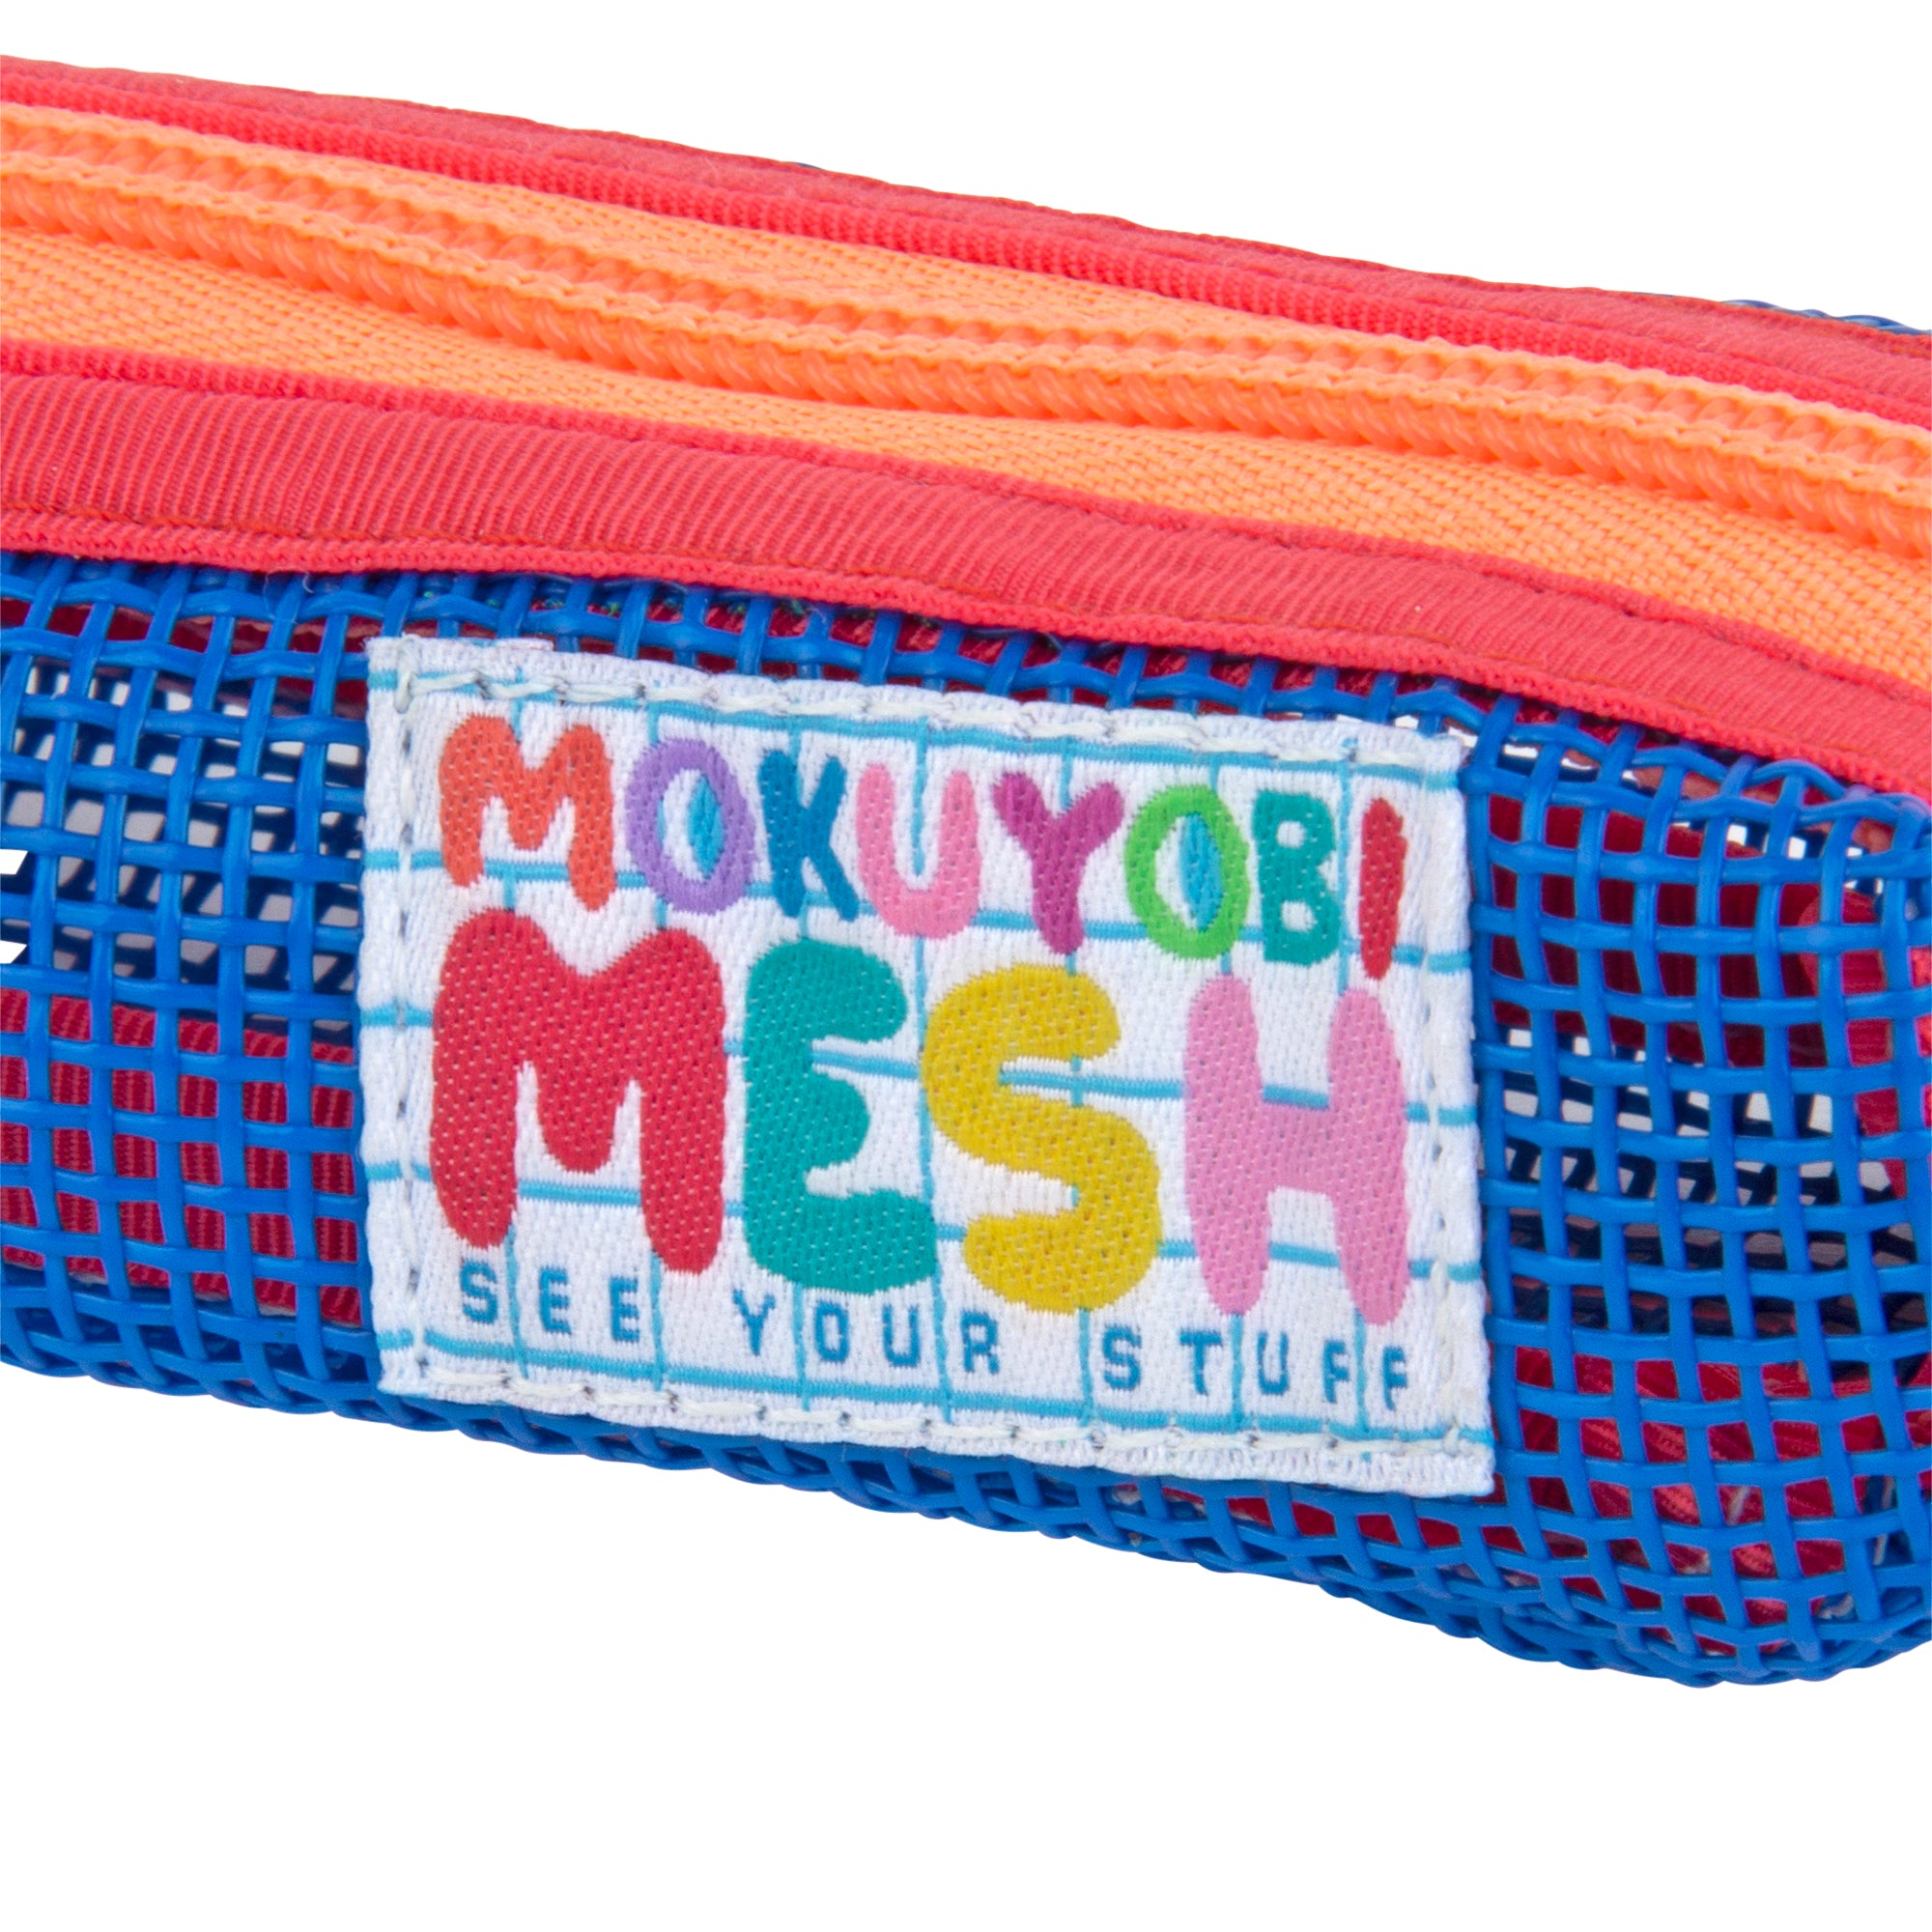 Slime Mesh Pencil Case – Mokuyobi